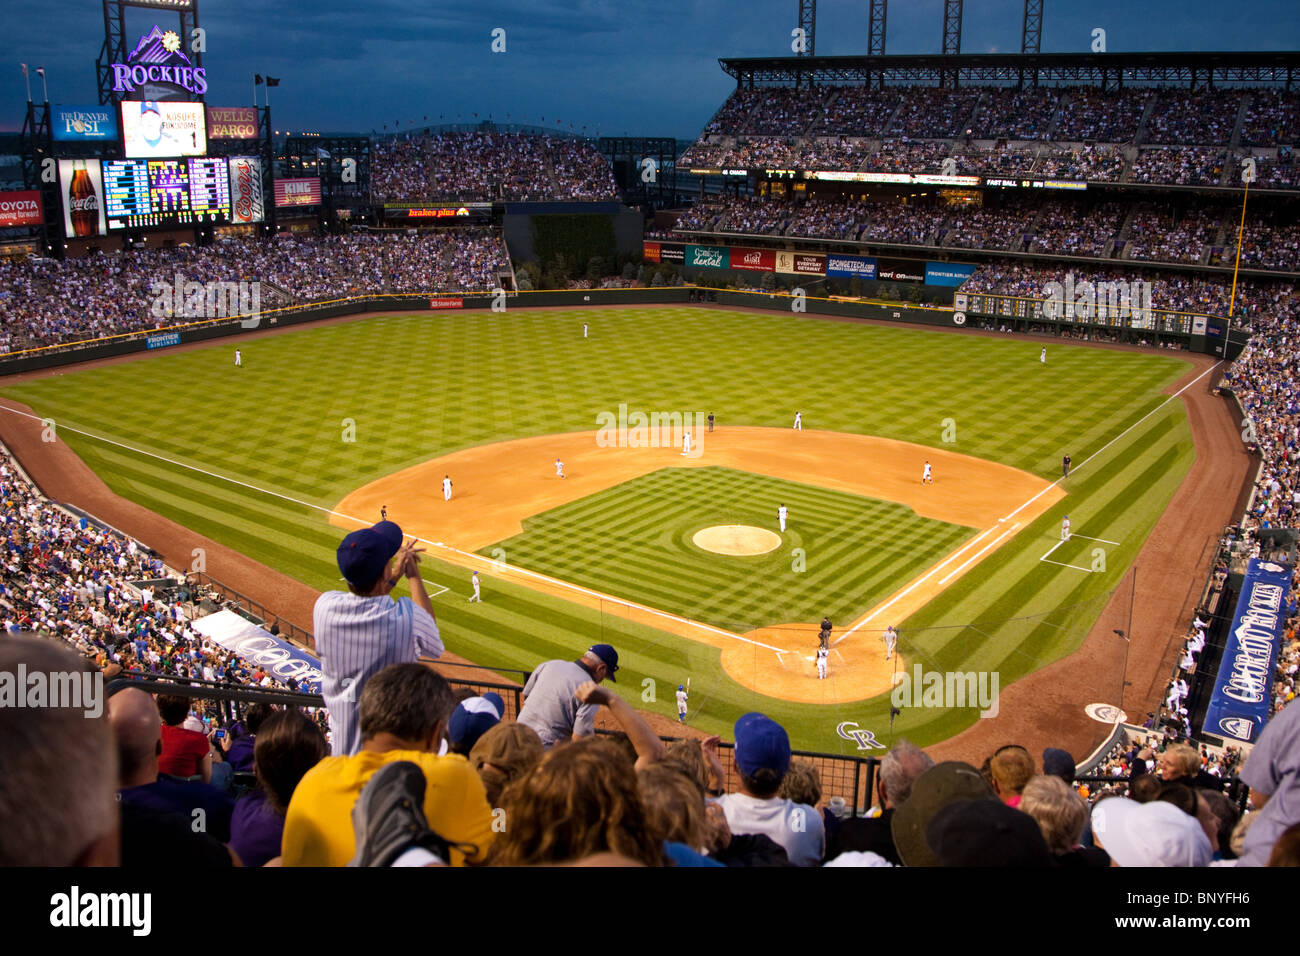 Coors Field, home of the Colorado Rockies baseball team, Denver, Colorado, USA Stock Photo